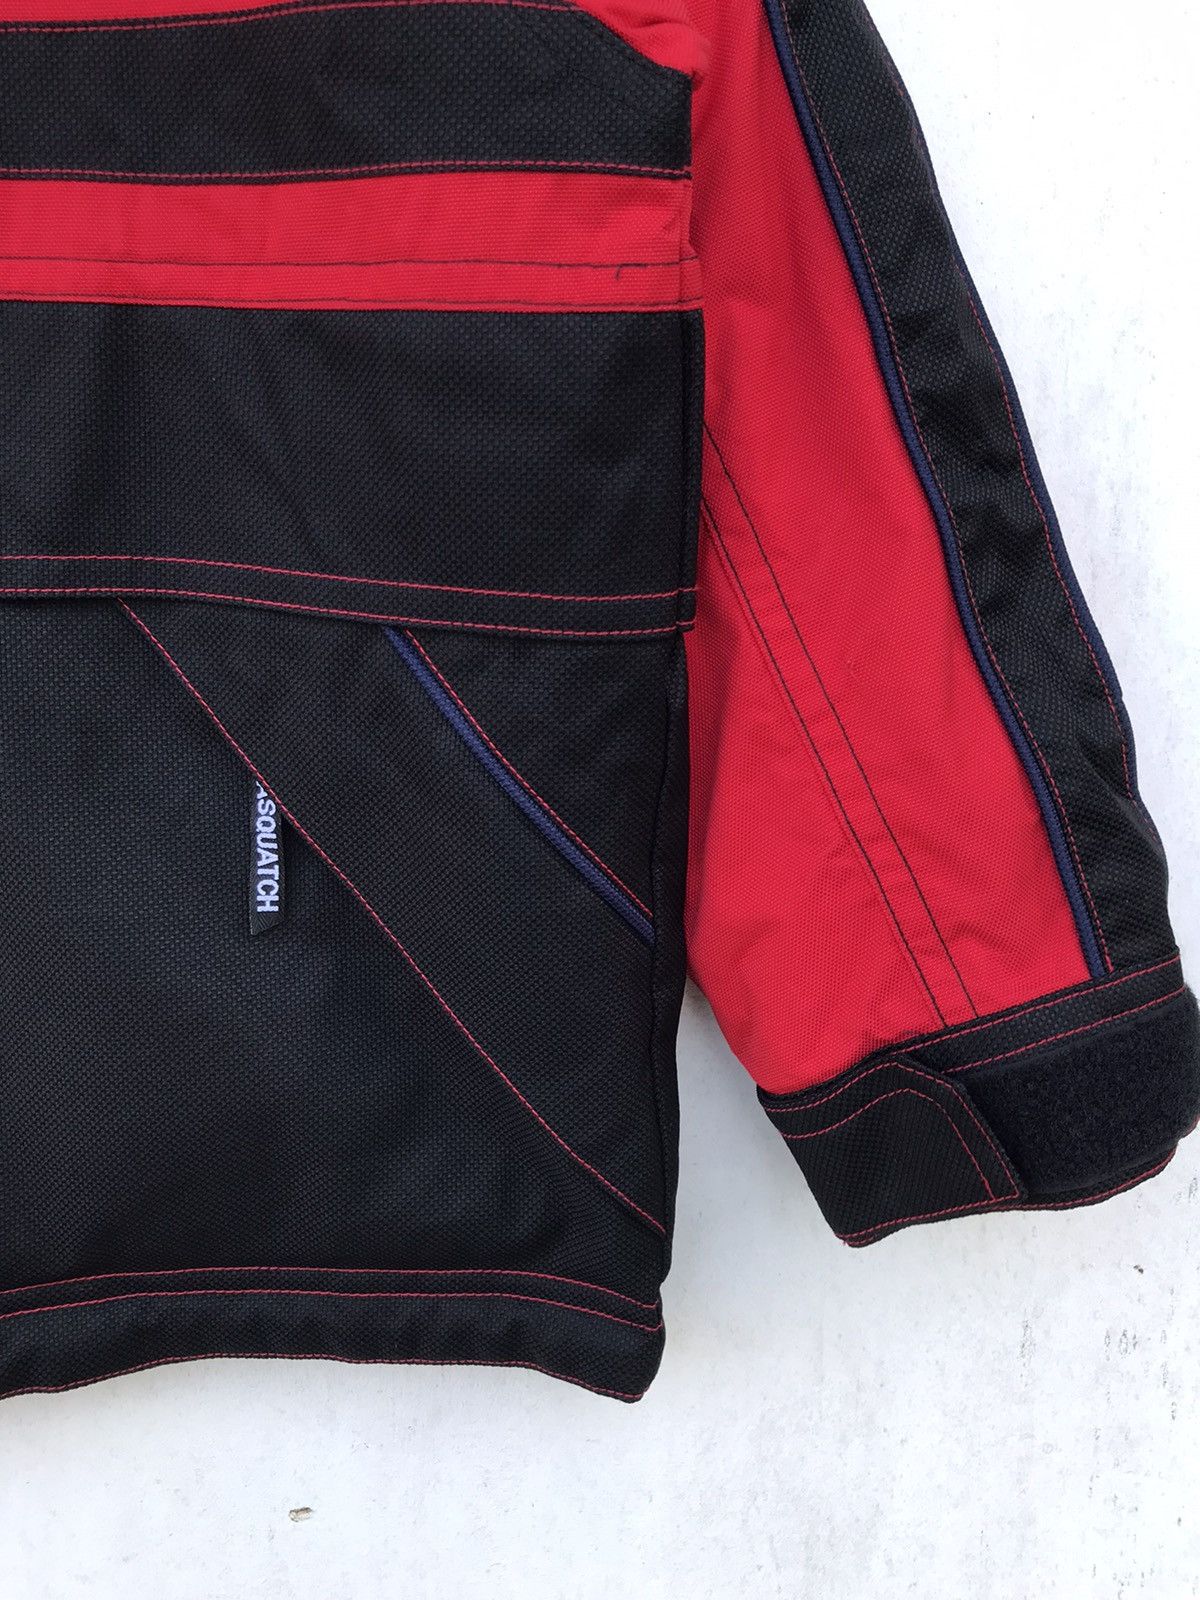 Sasquatch Ski One Set Jacket With Pants - 10